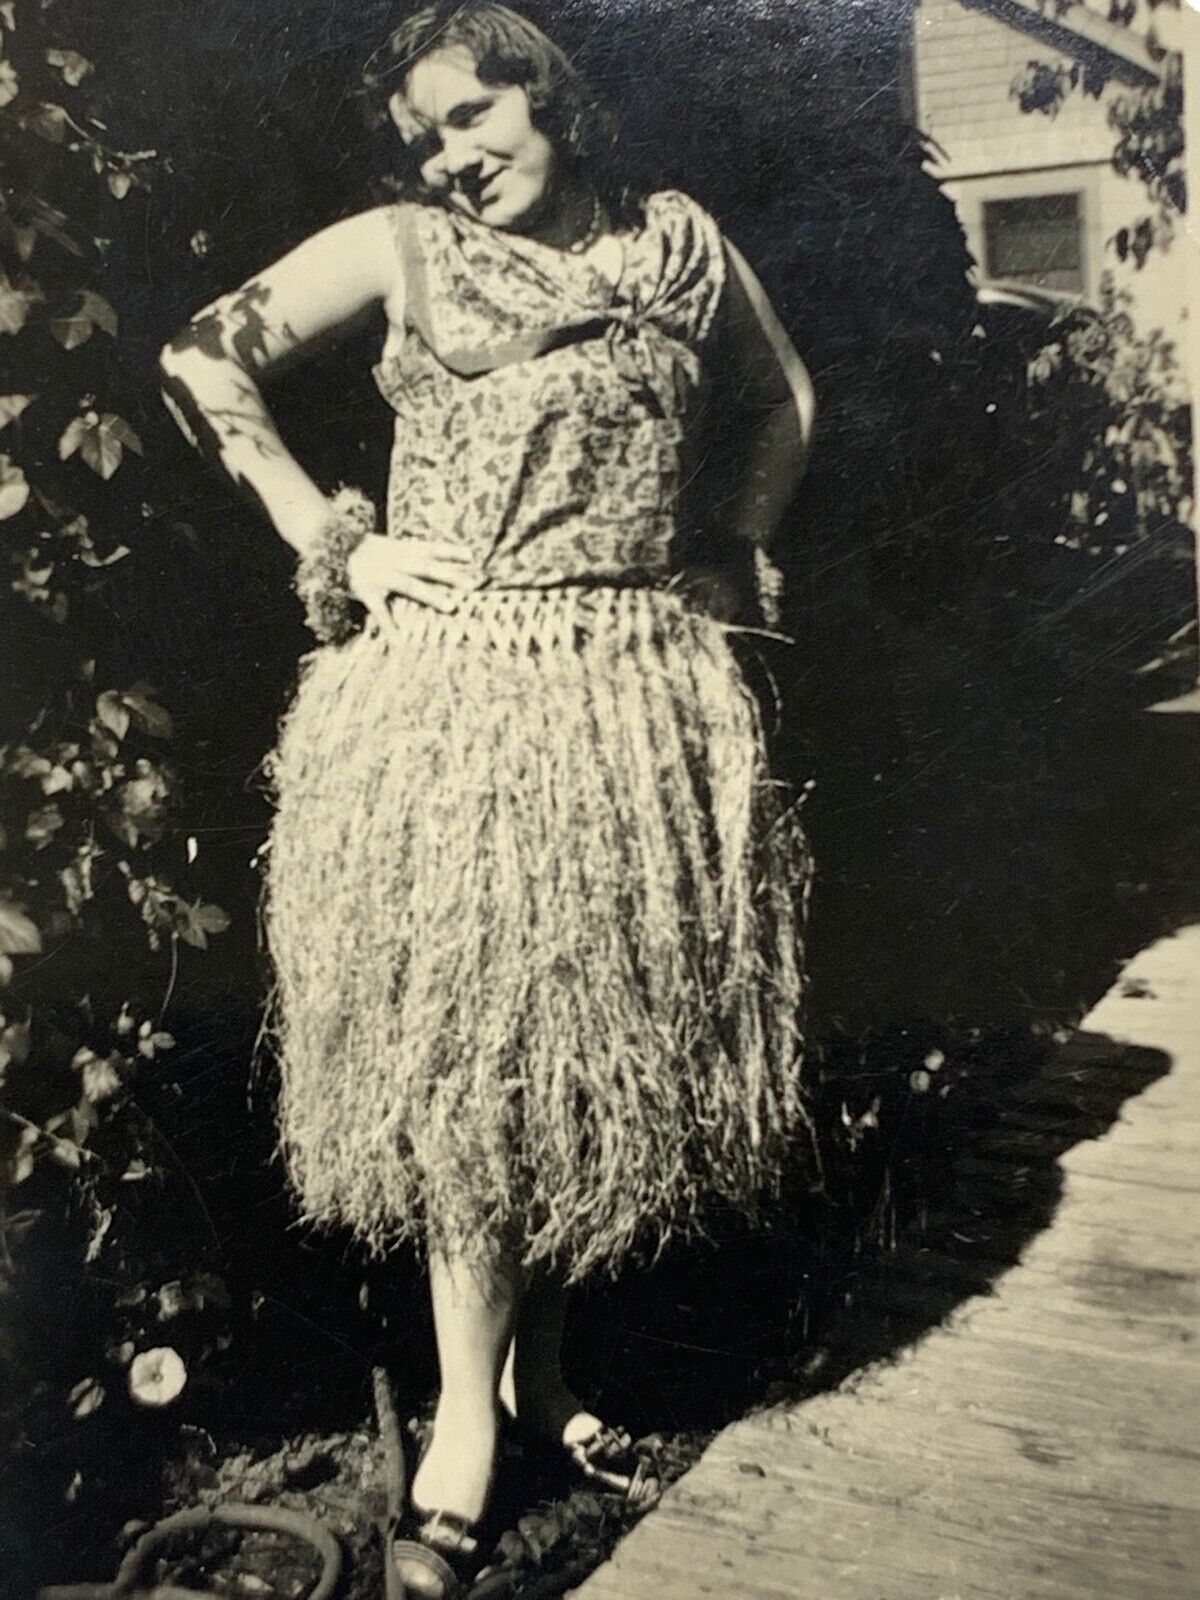 (AaE) FOUND PHOTO Photograph Snapshot Hawaiian Hawaii Grass Skirt Woman B&W